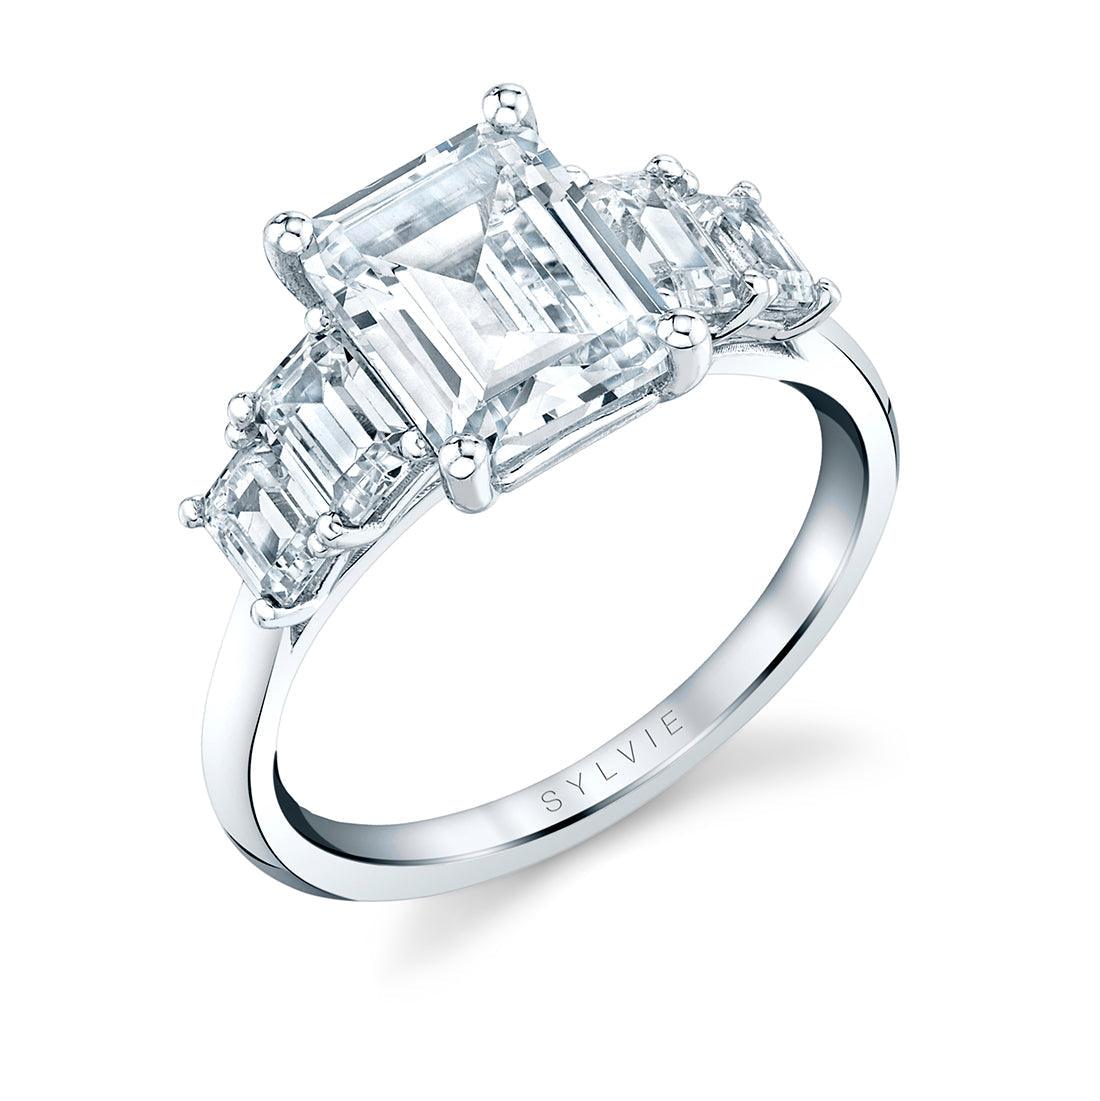 Platinum Brenley Emerald Cut Engagement Ring - Water Street Jewelers